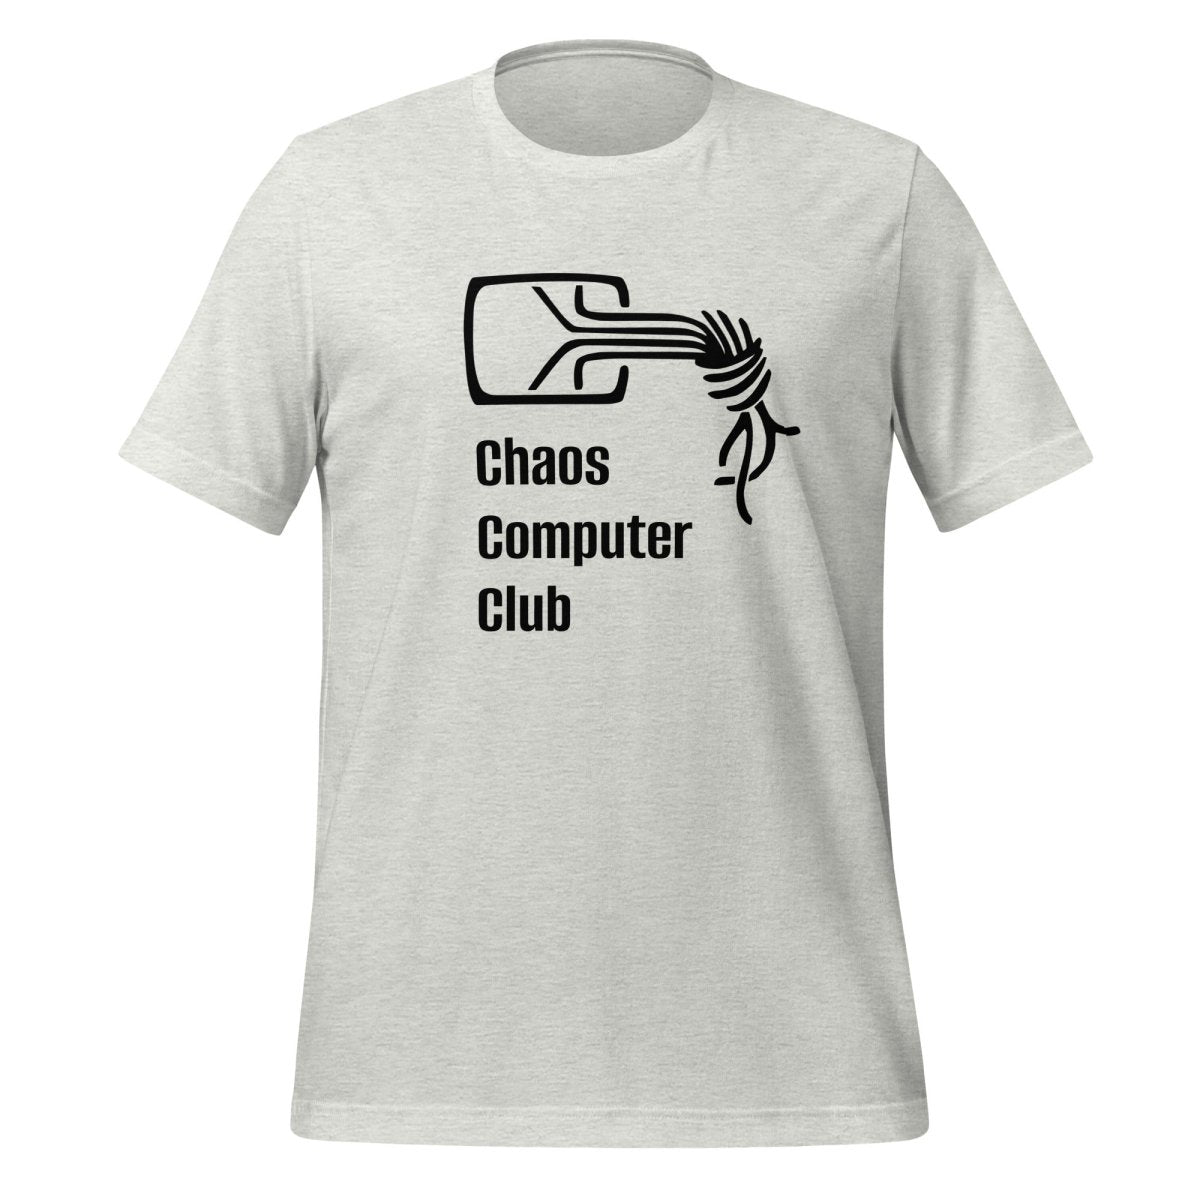 Chaos Computer Club Light T - Shirt (unisex) - Ash - AI Store